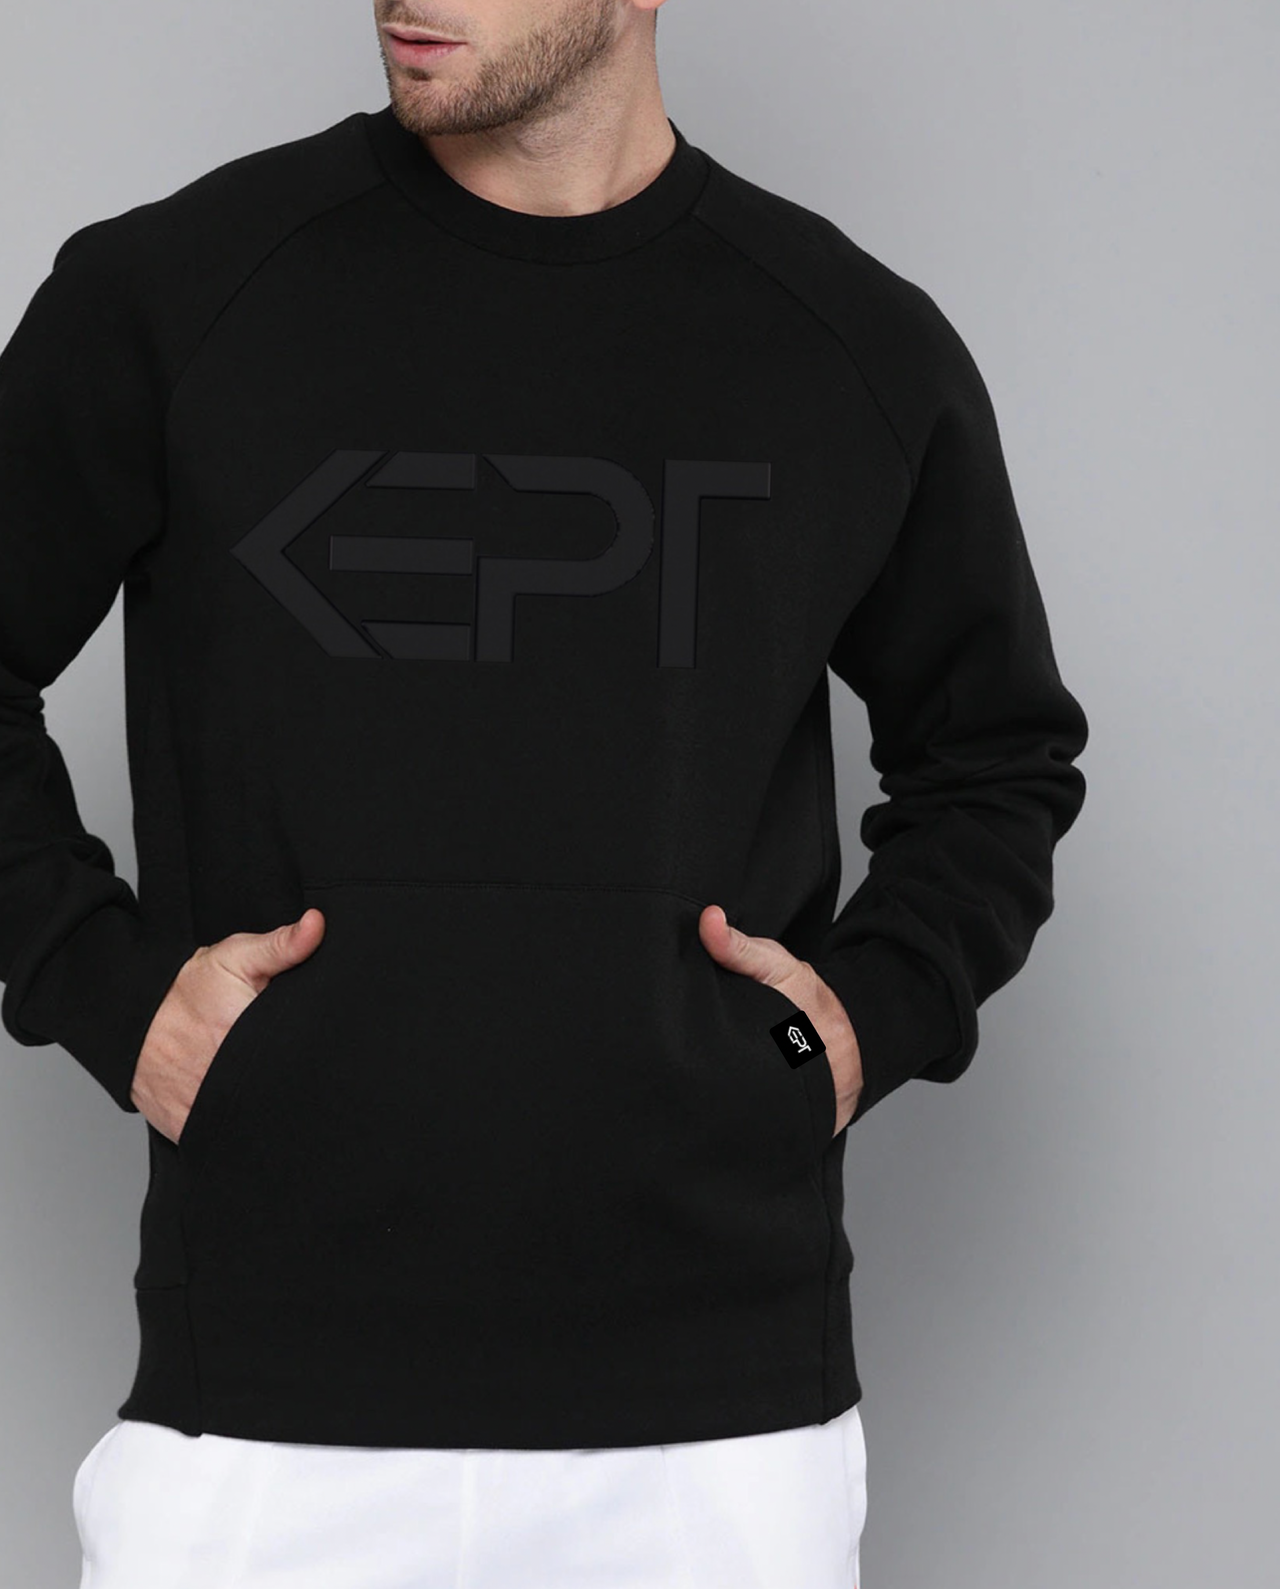 A man wearing a black sweatshirt made by KEPT.